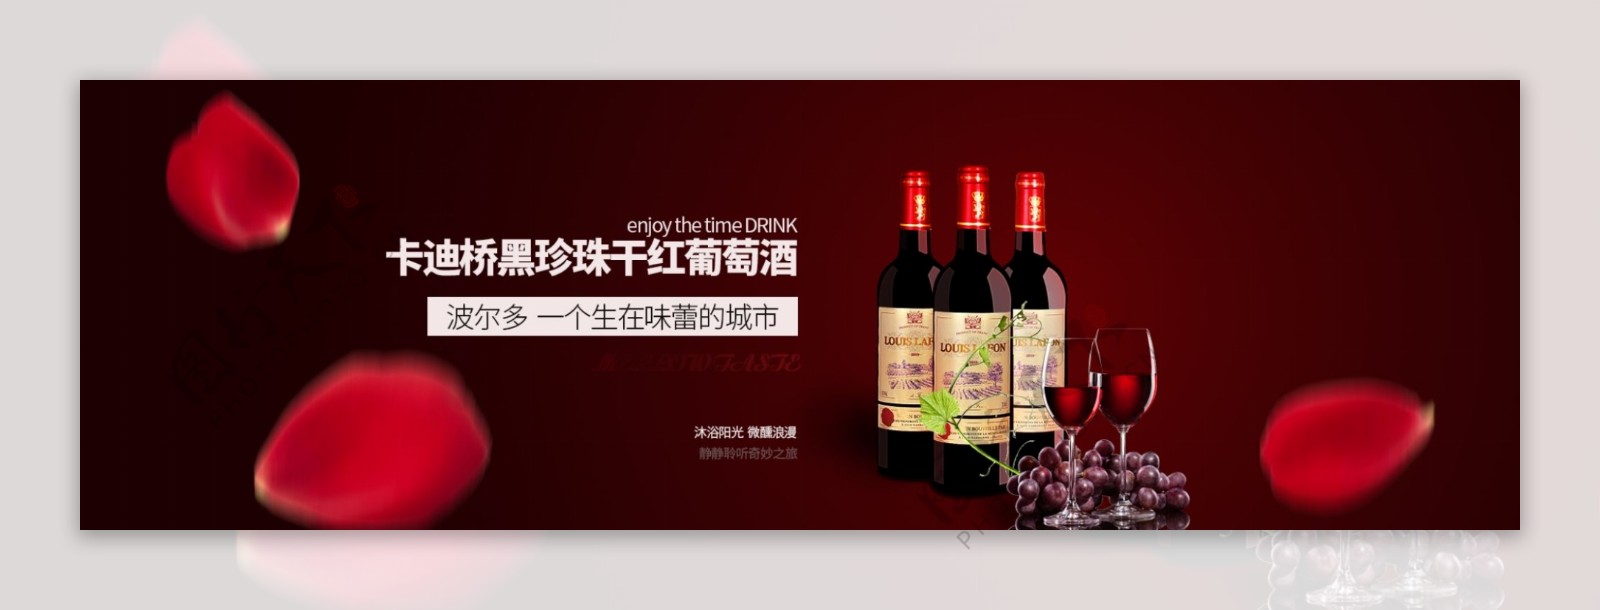 高端红葡萄酒banner